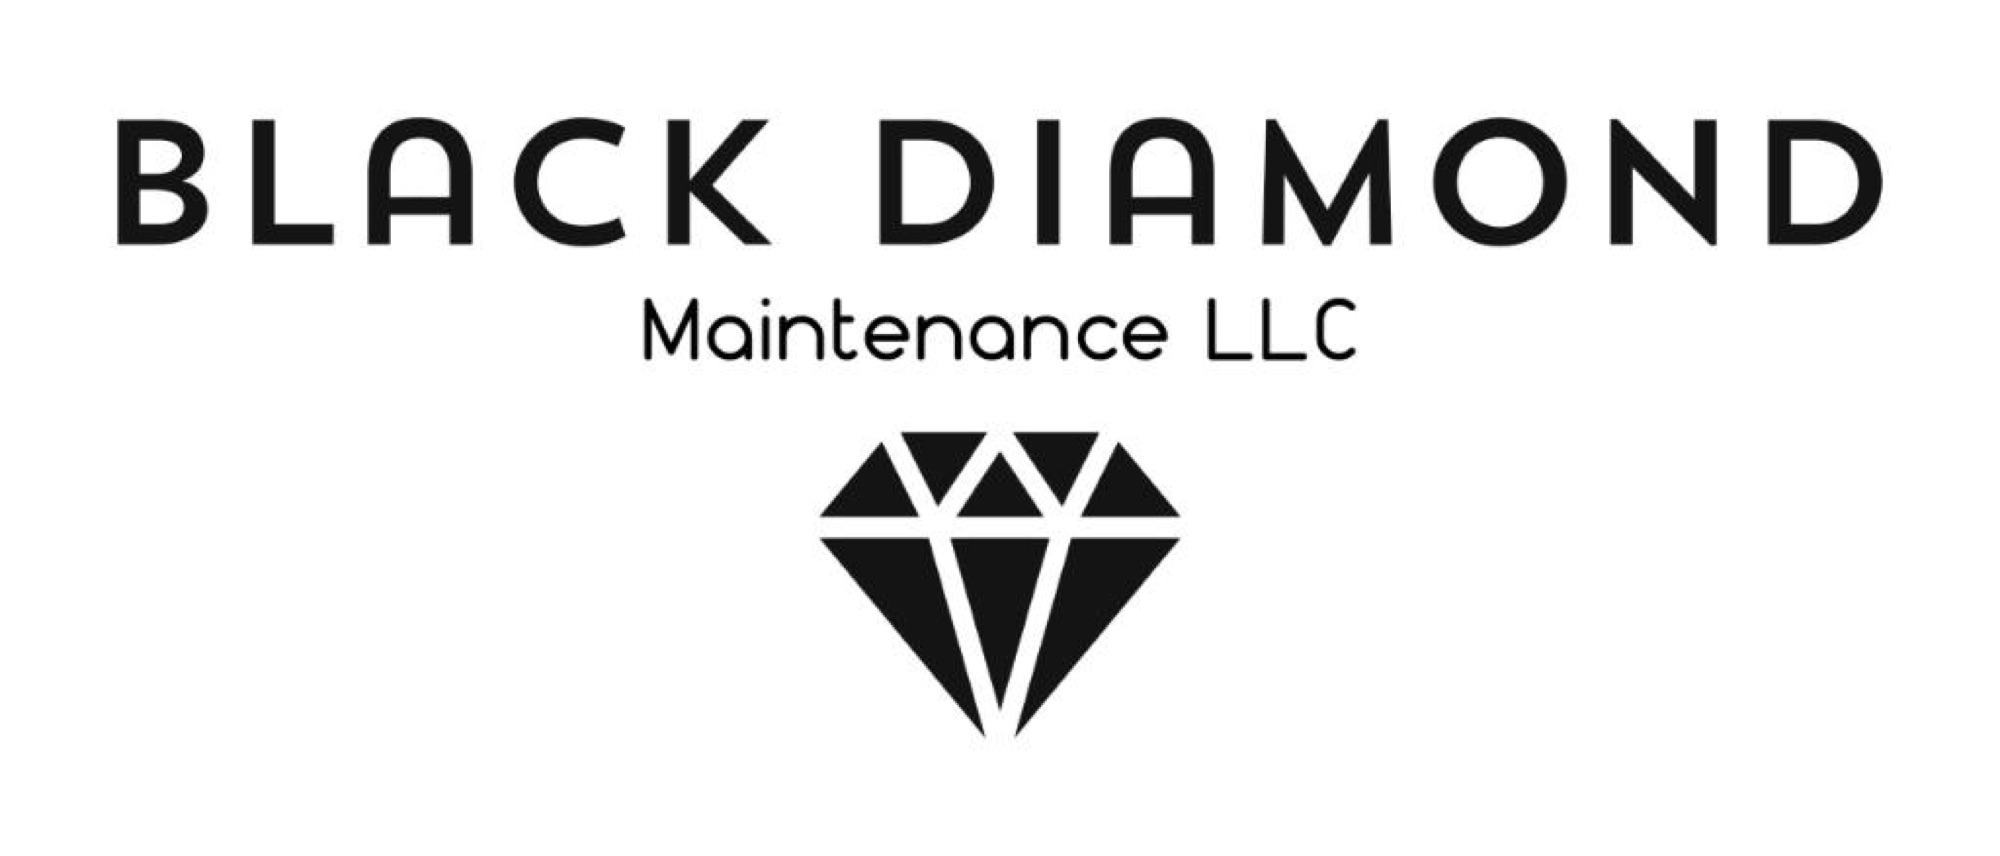 Black Diamond Maintenance, LLC Logo